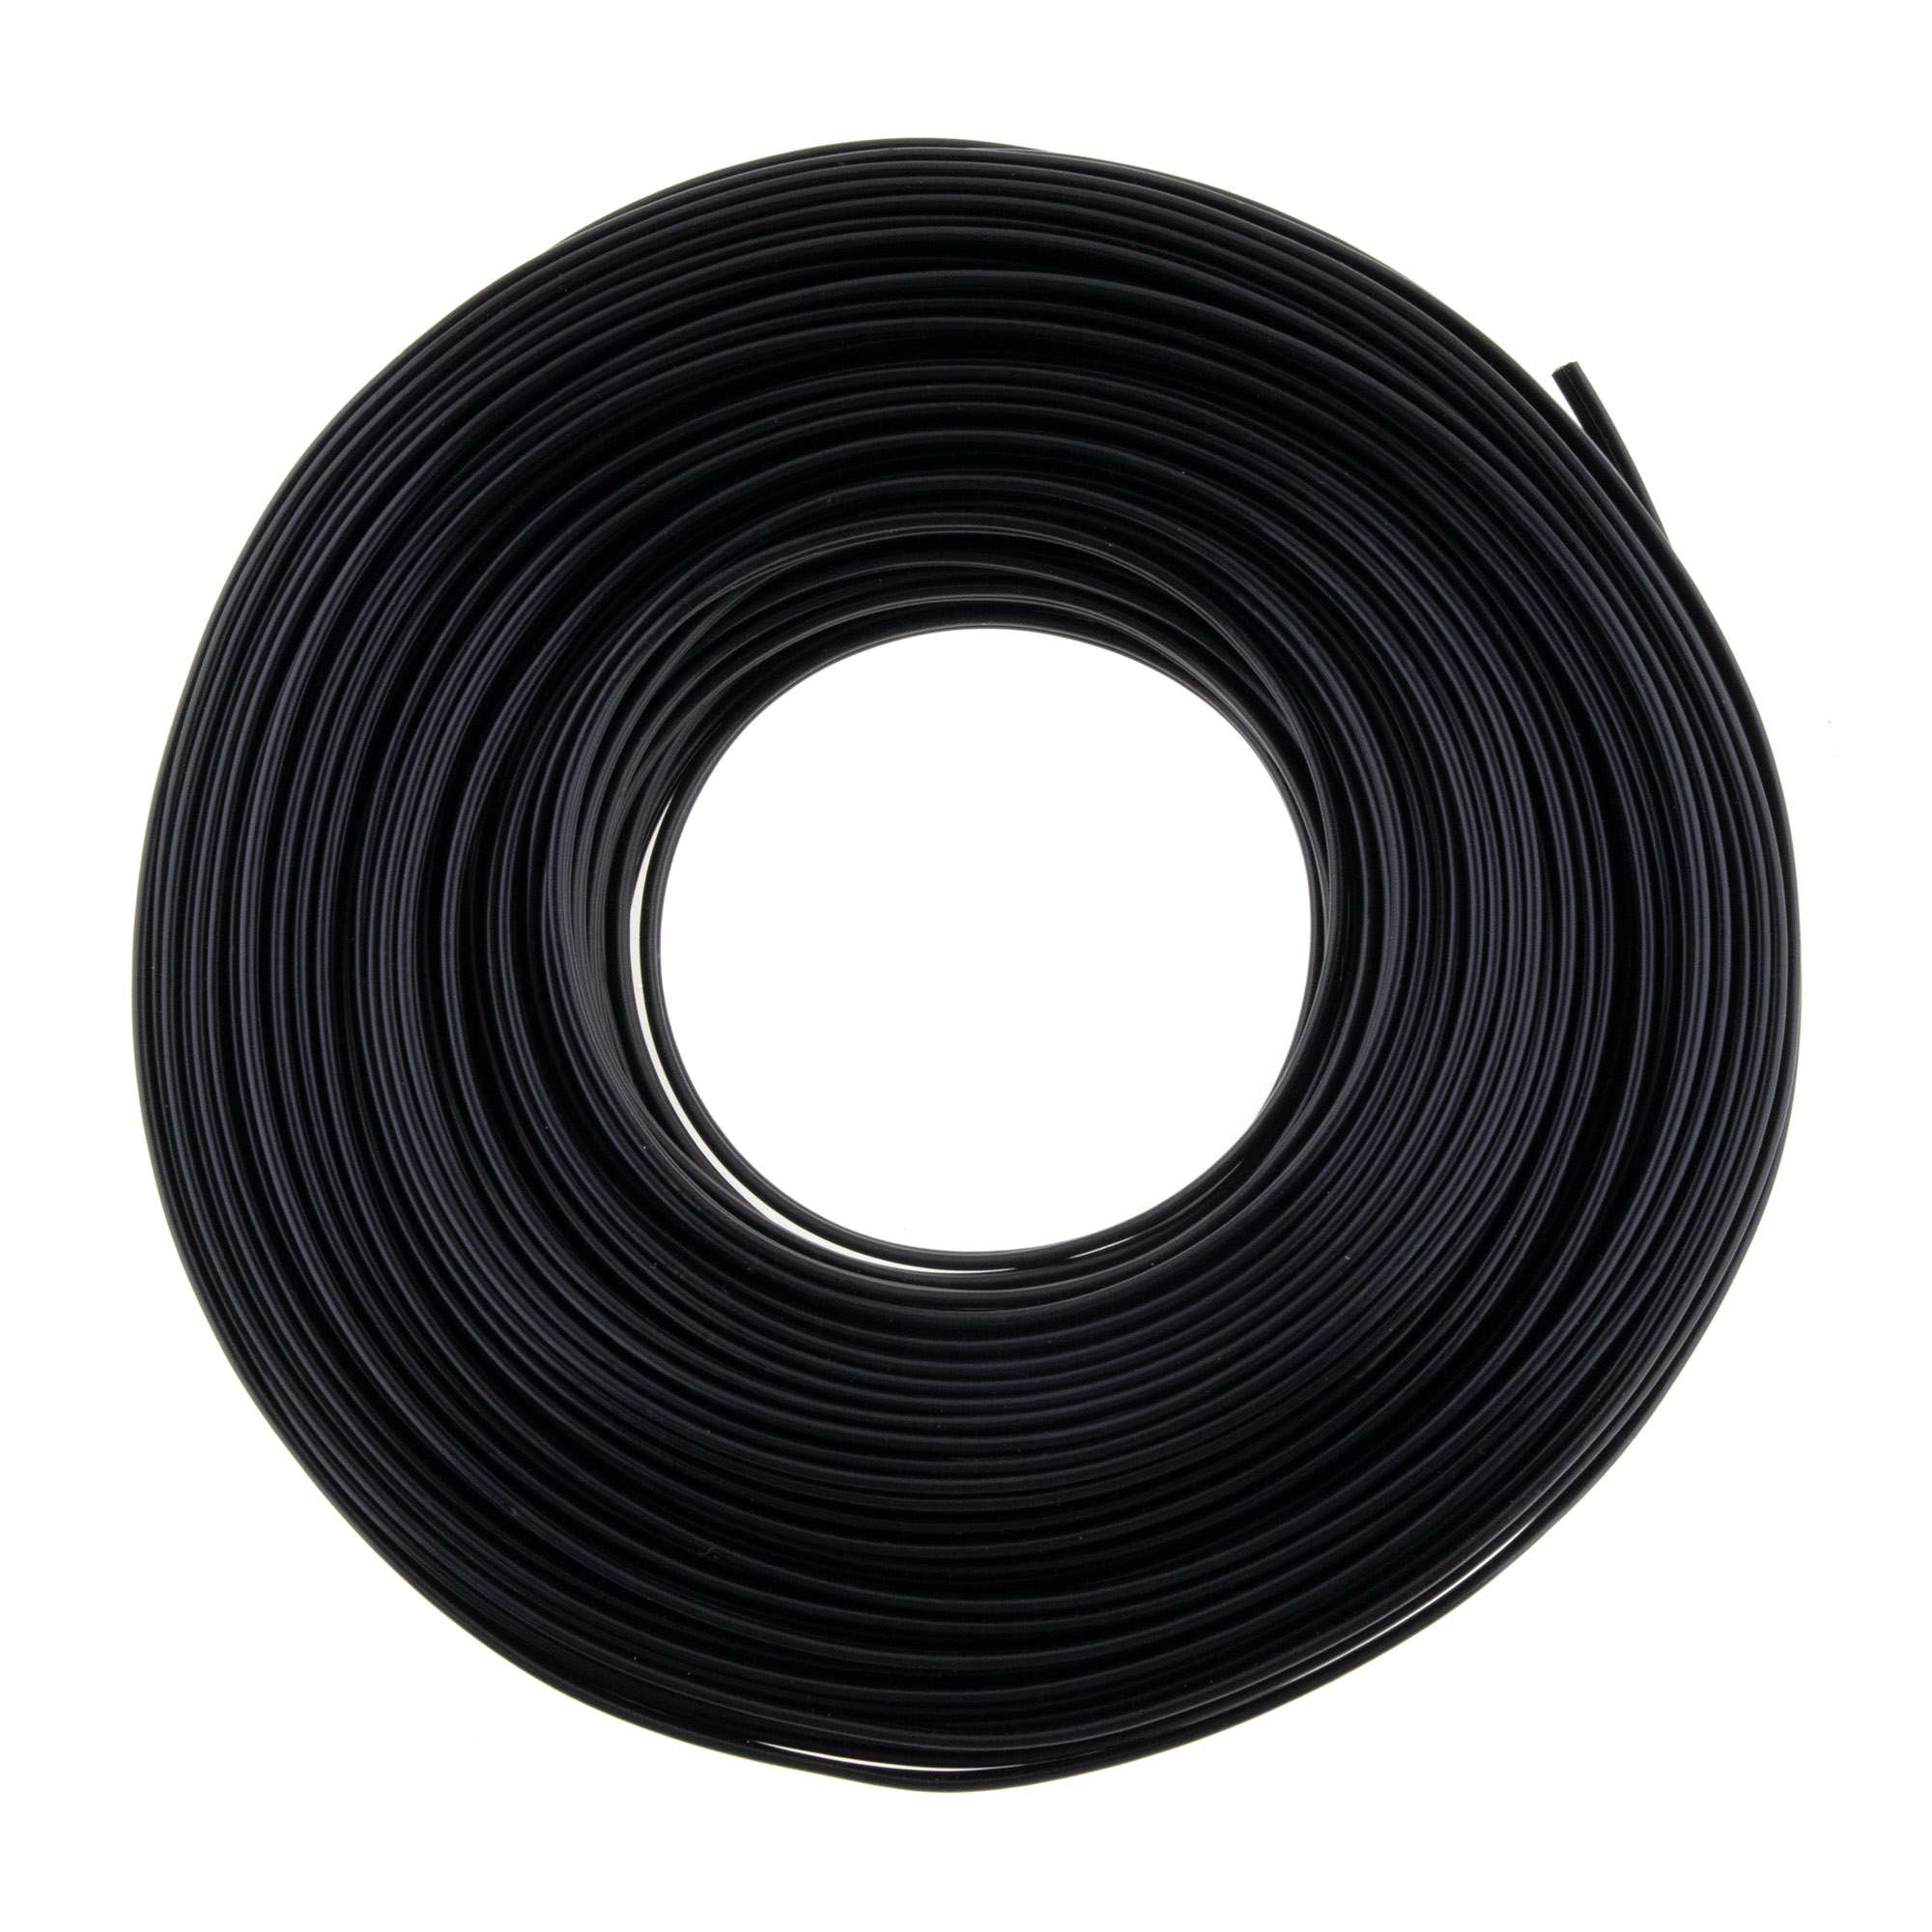 Loudspeaker cable black 50m 0.50mm